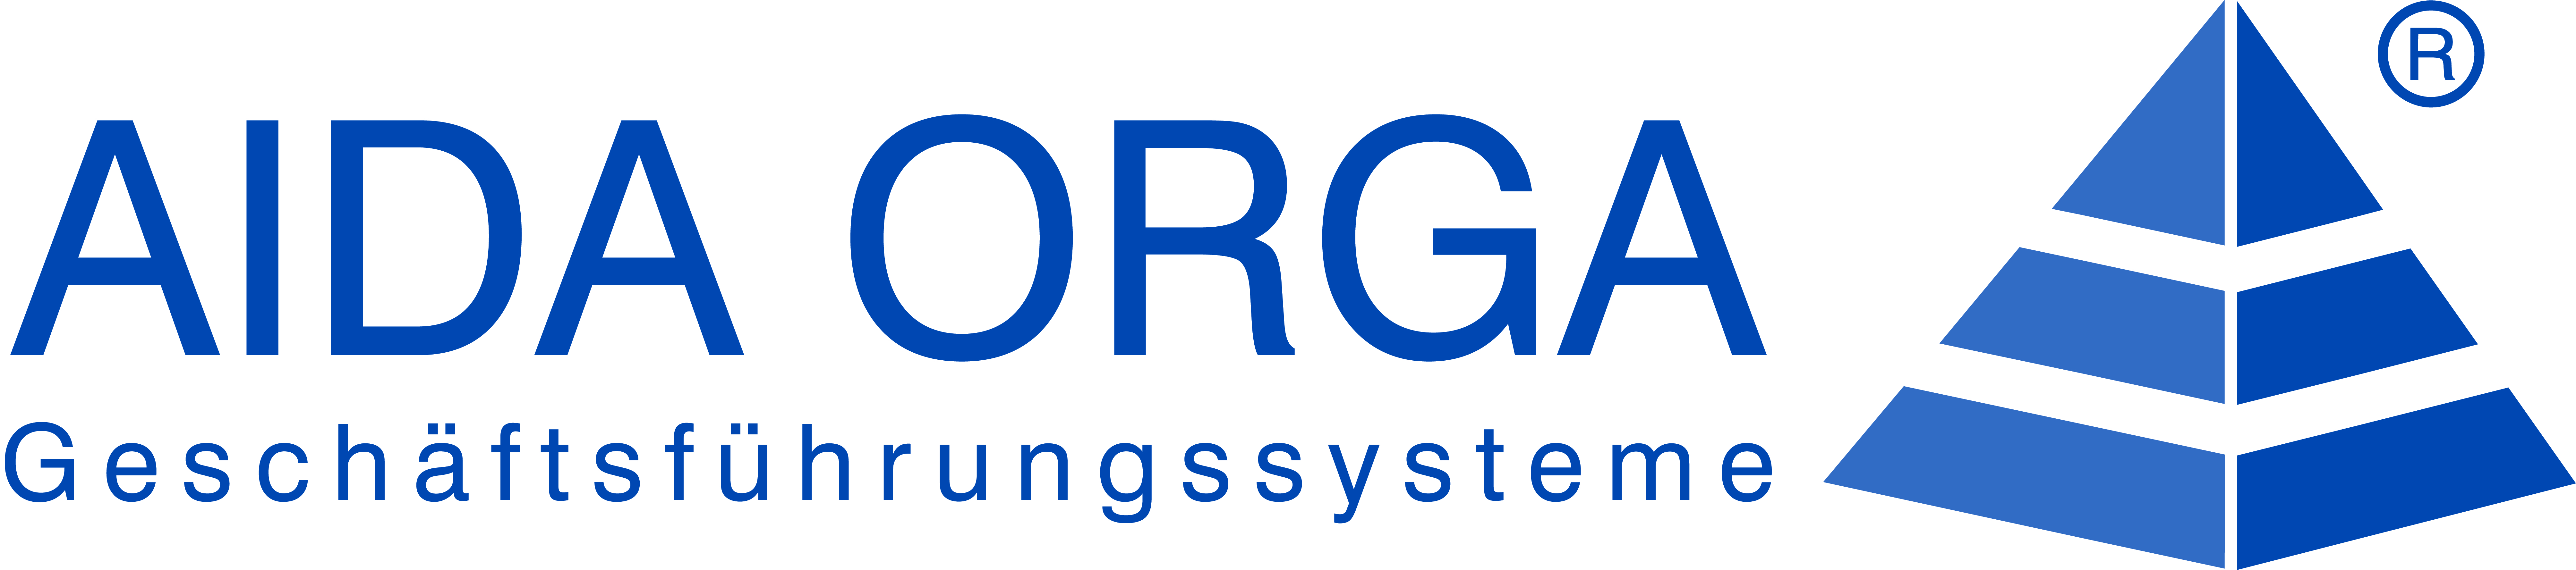 AIDA ORGA GmbH Logo